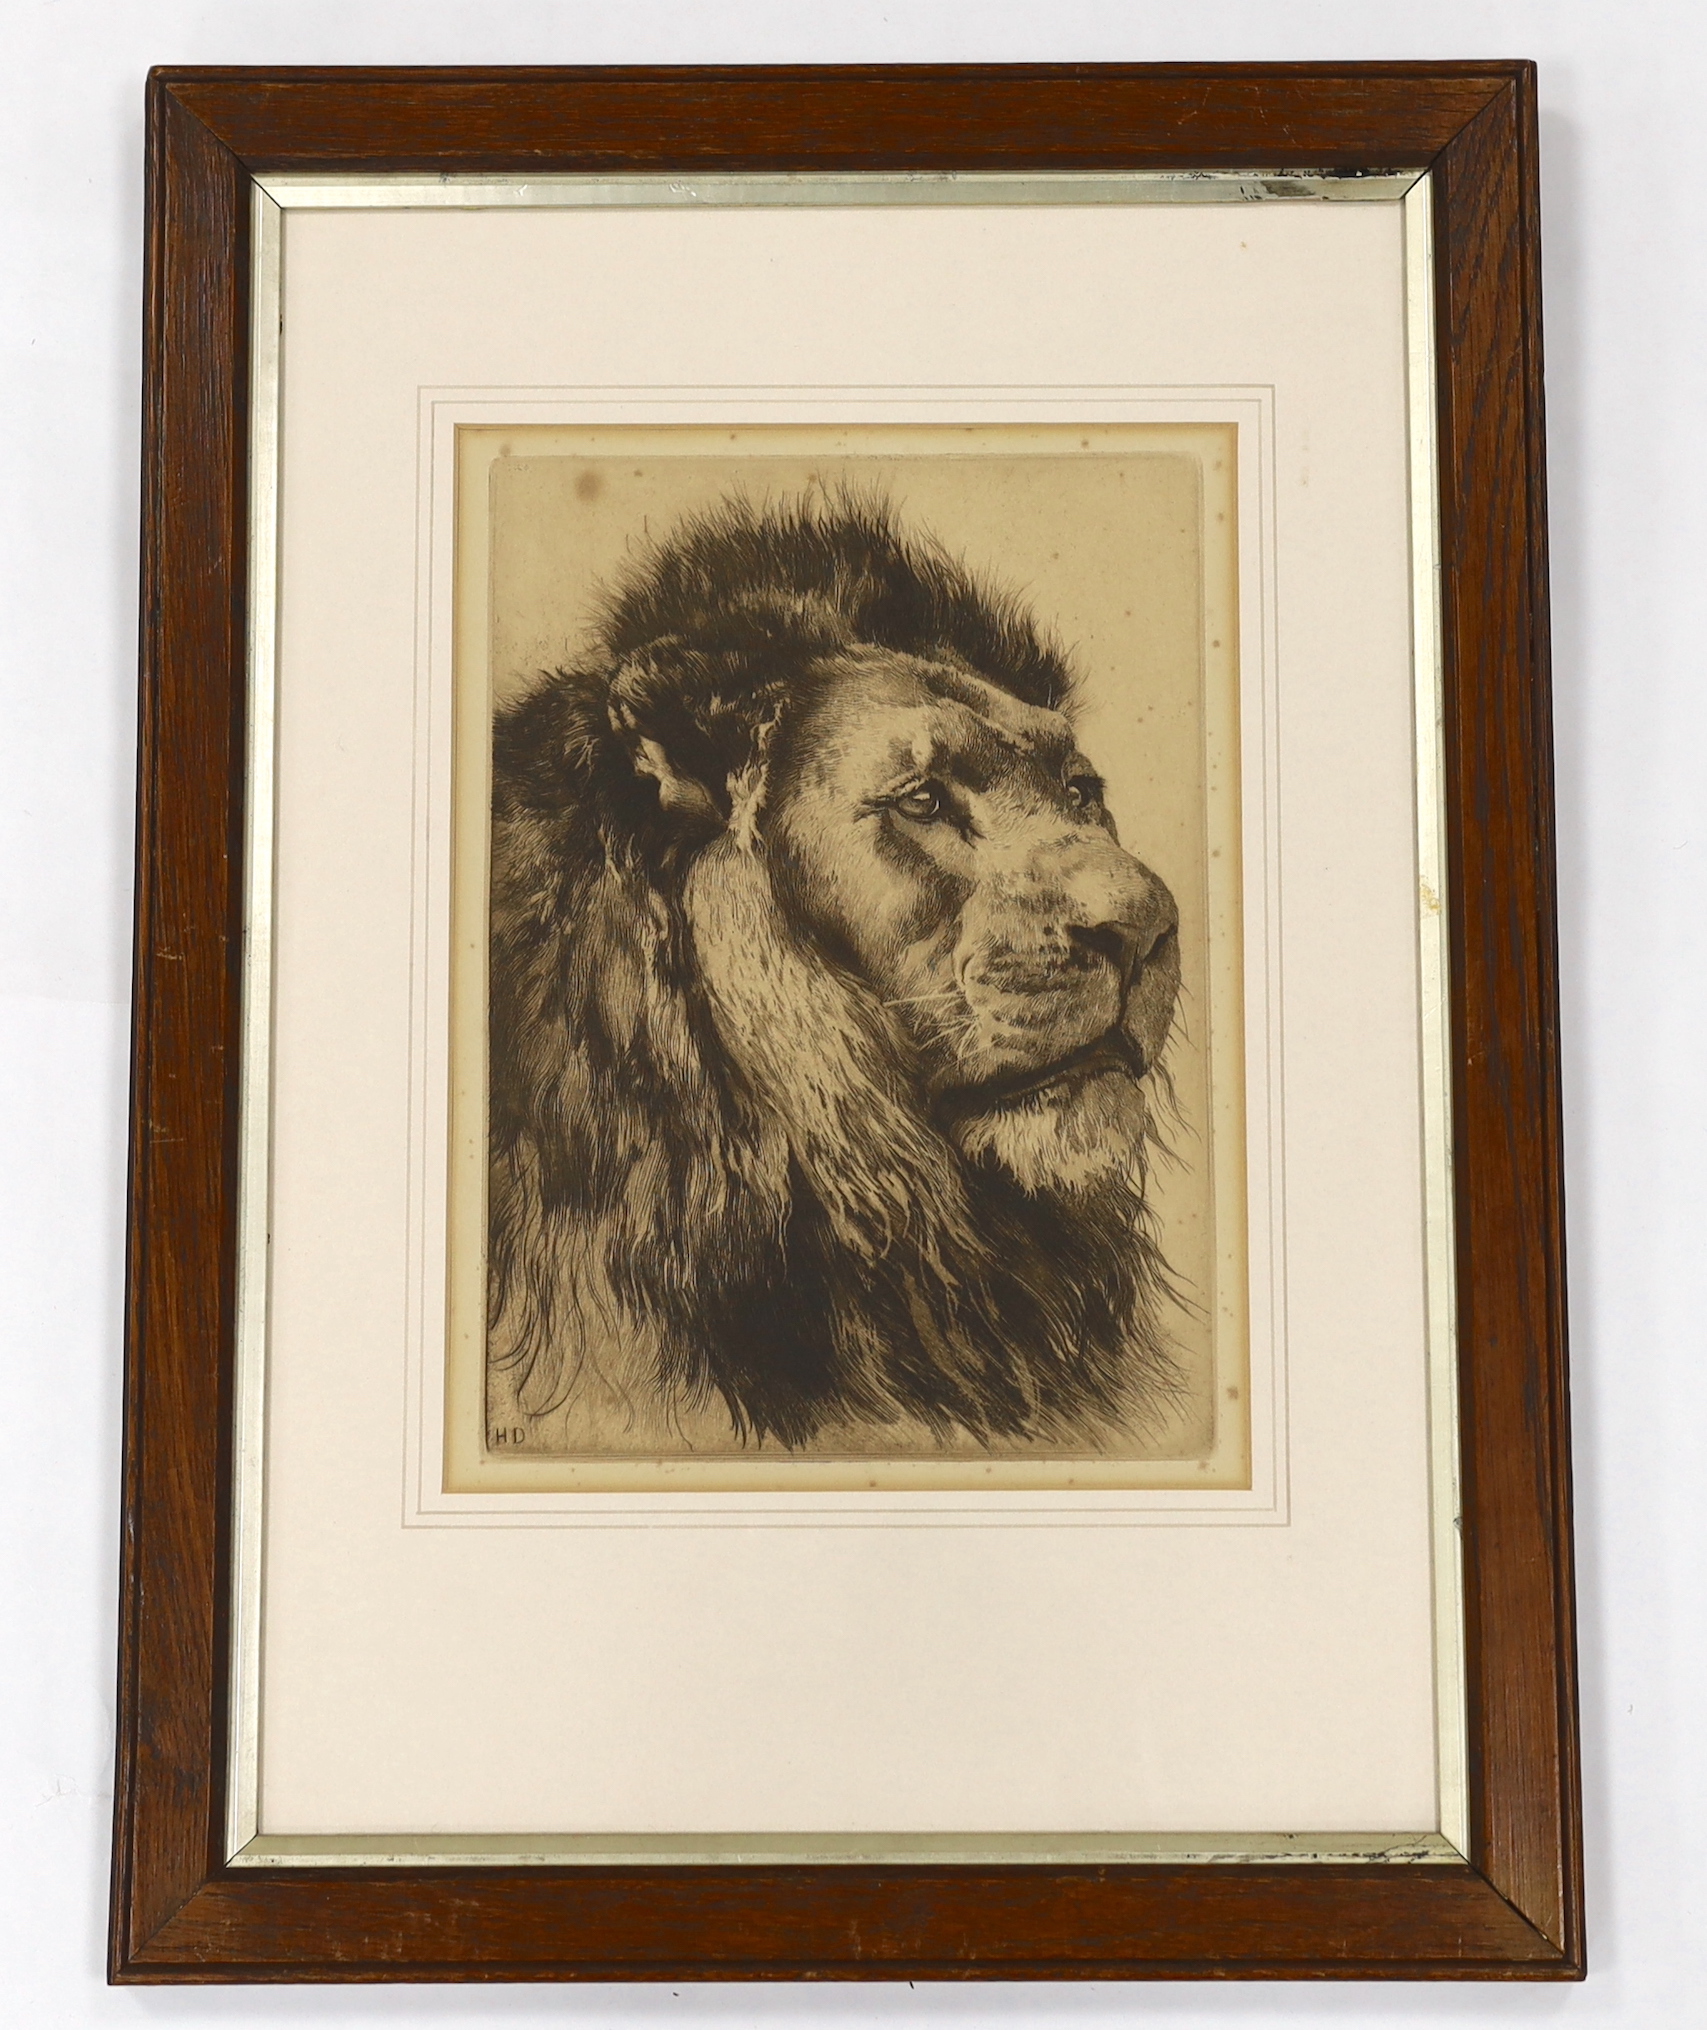 Herbert Dicksee (1862-1942), etching, Head of a Lion, 29 x 21cm